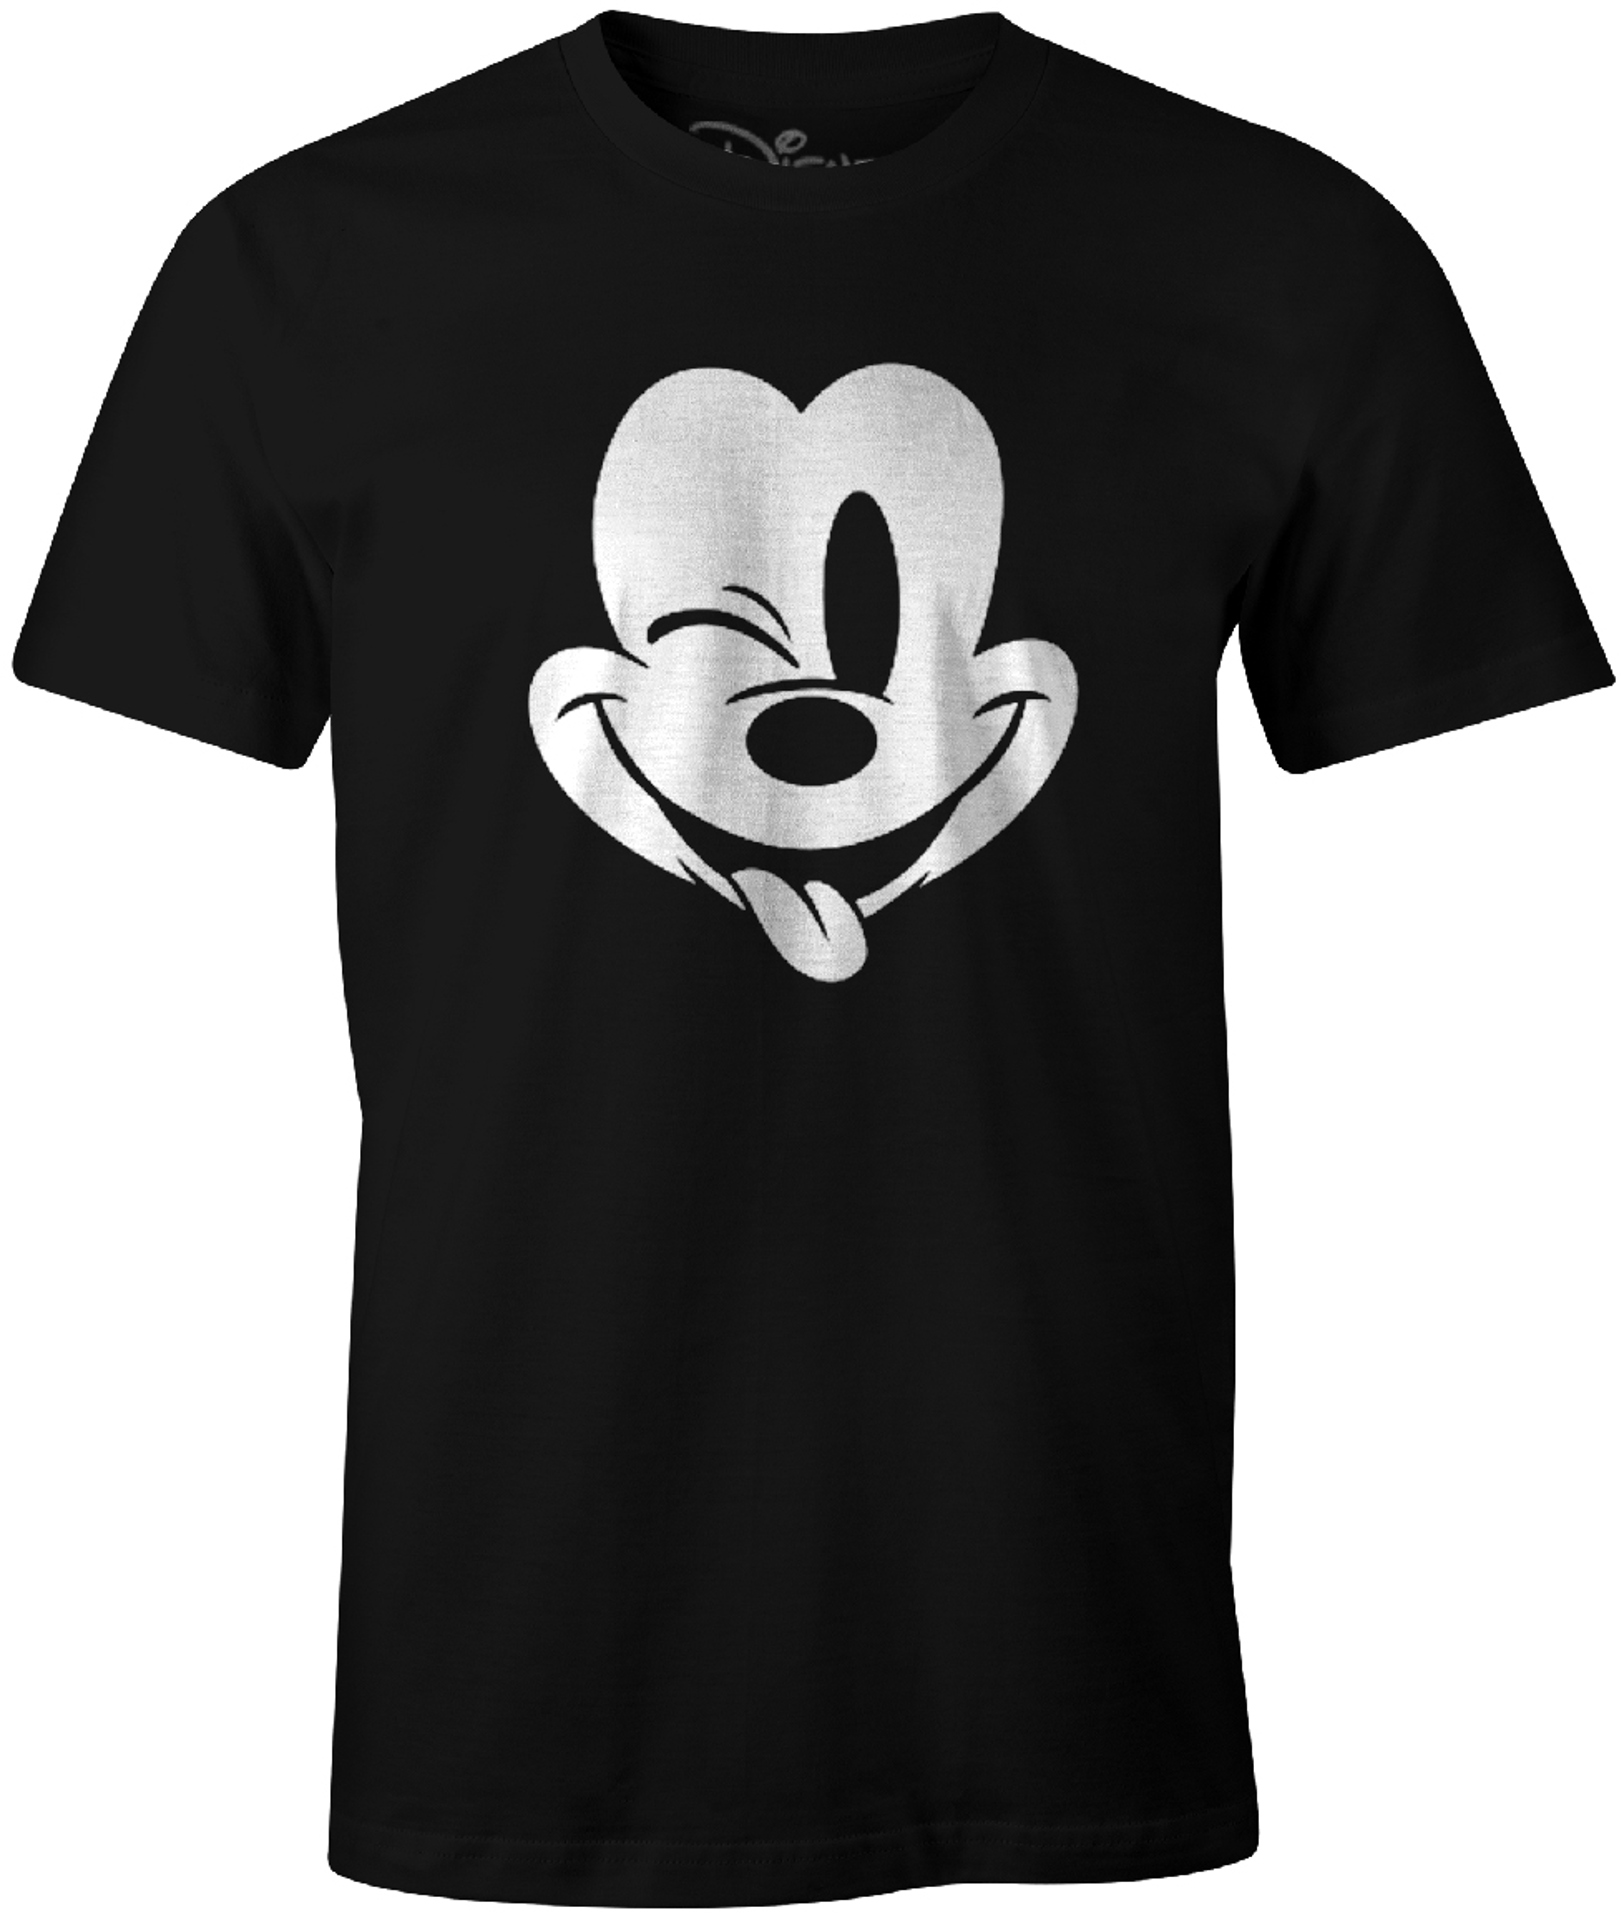 Disney - T-Shirt Noir Mickey Mouse faisant un clin d\'oeil - M